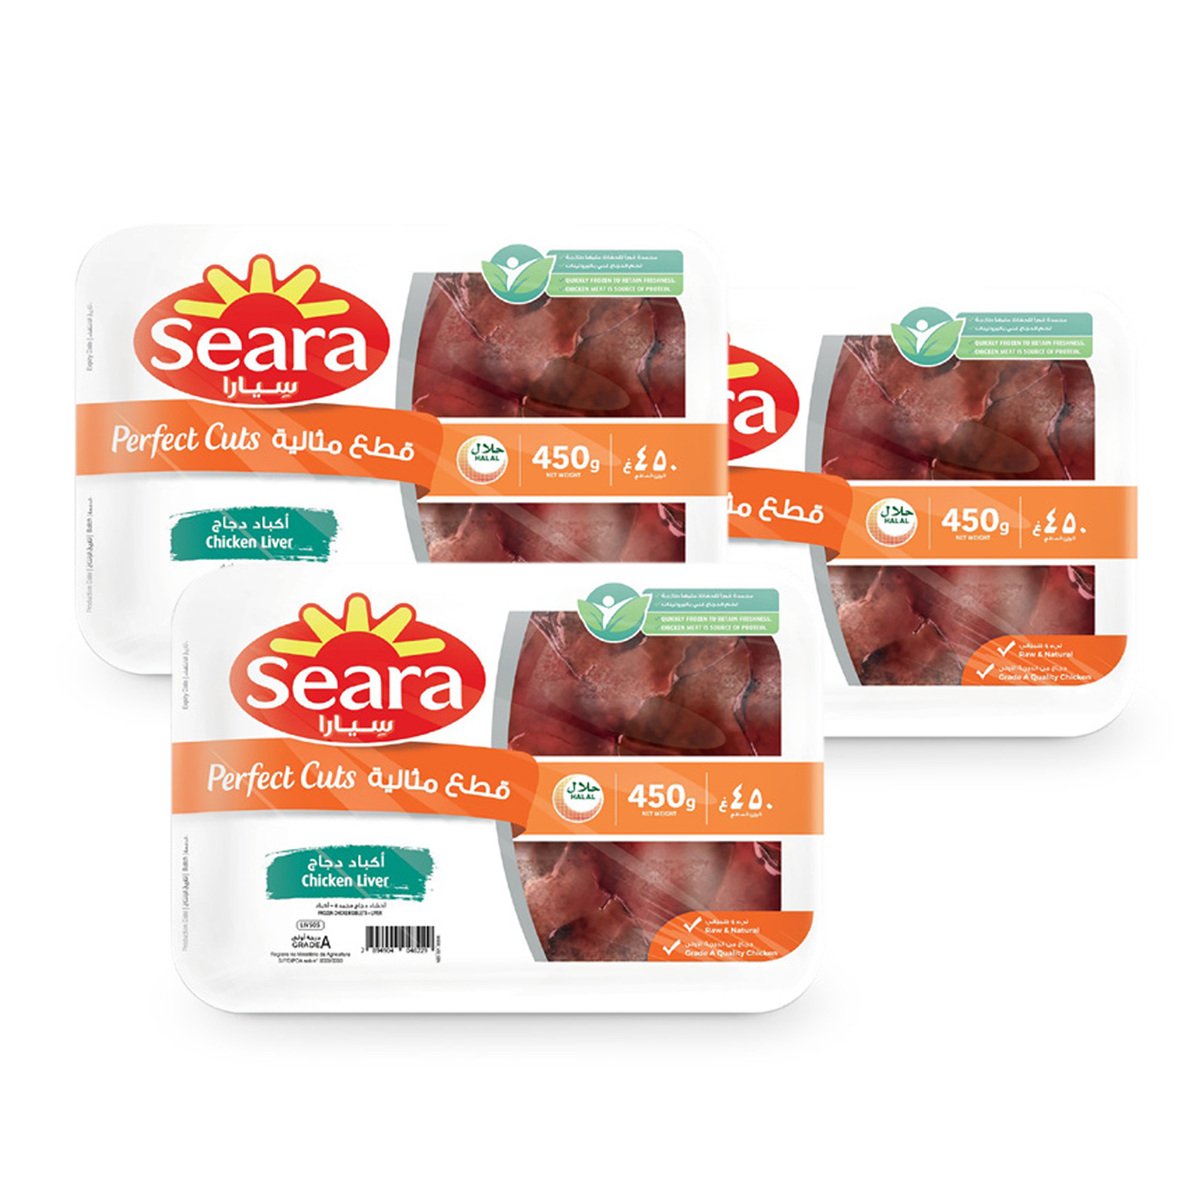 Seara Frozen Chicken Livers Value Pack 3 x 450 g